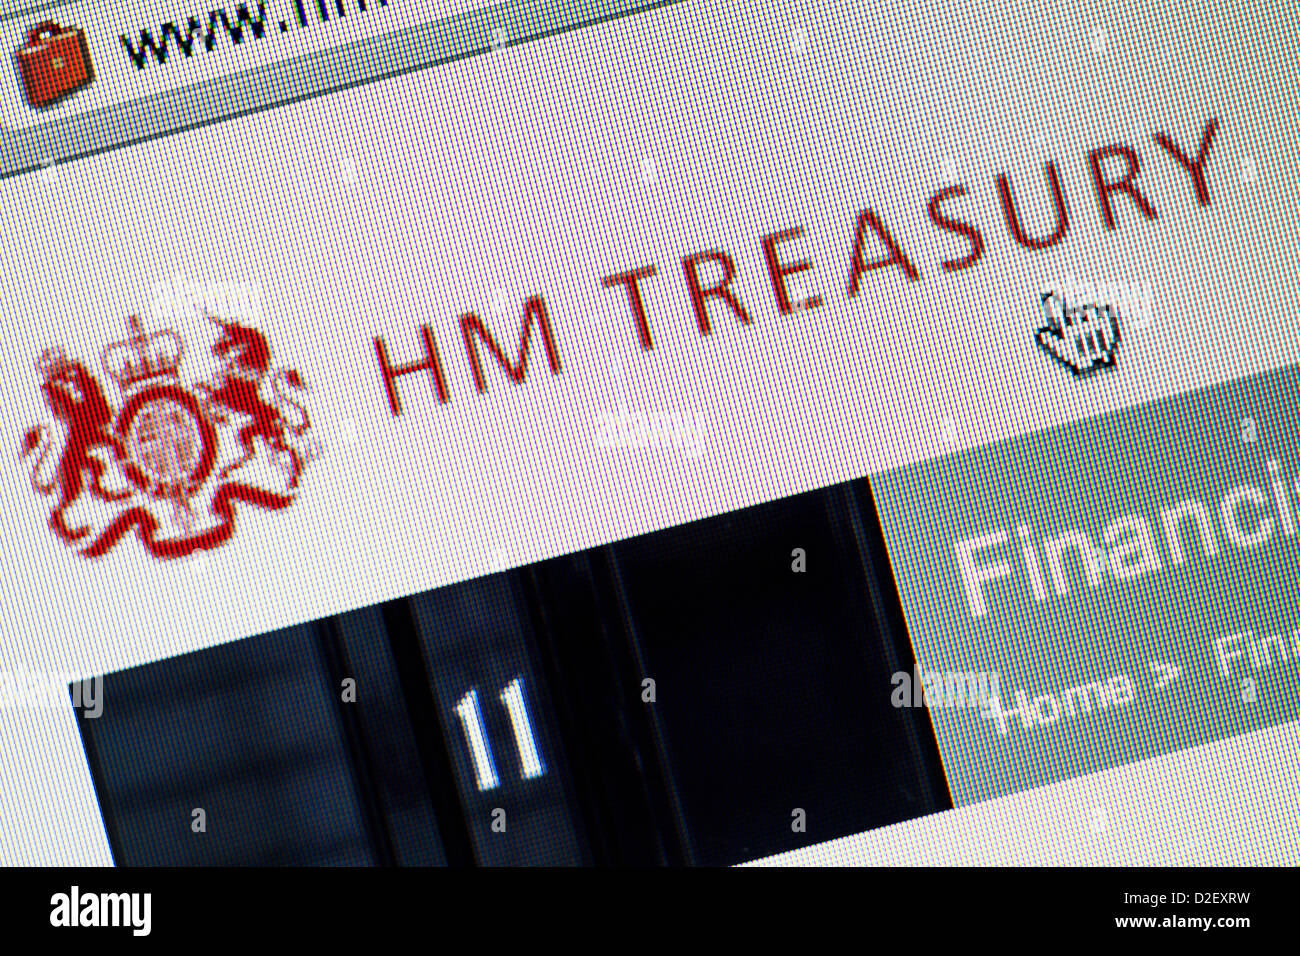 HM Treasury logo and website close up Stock Photo